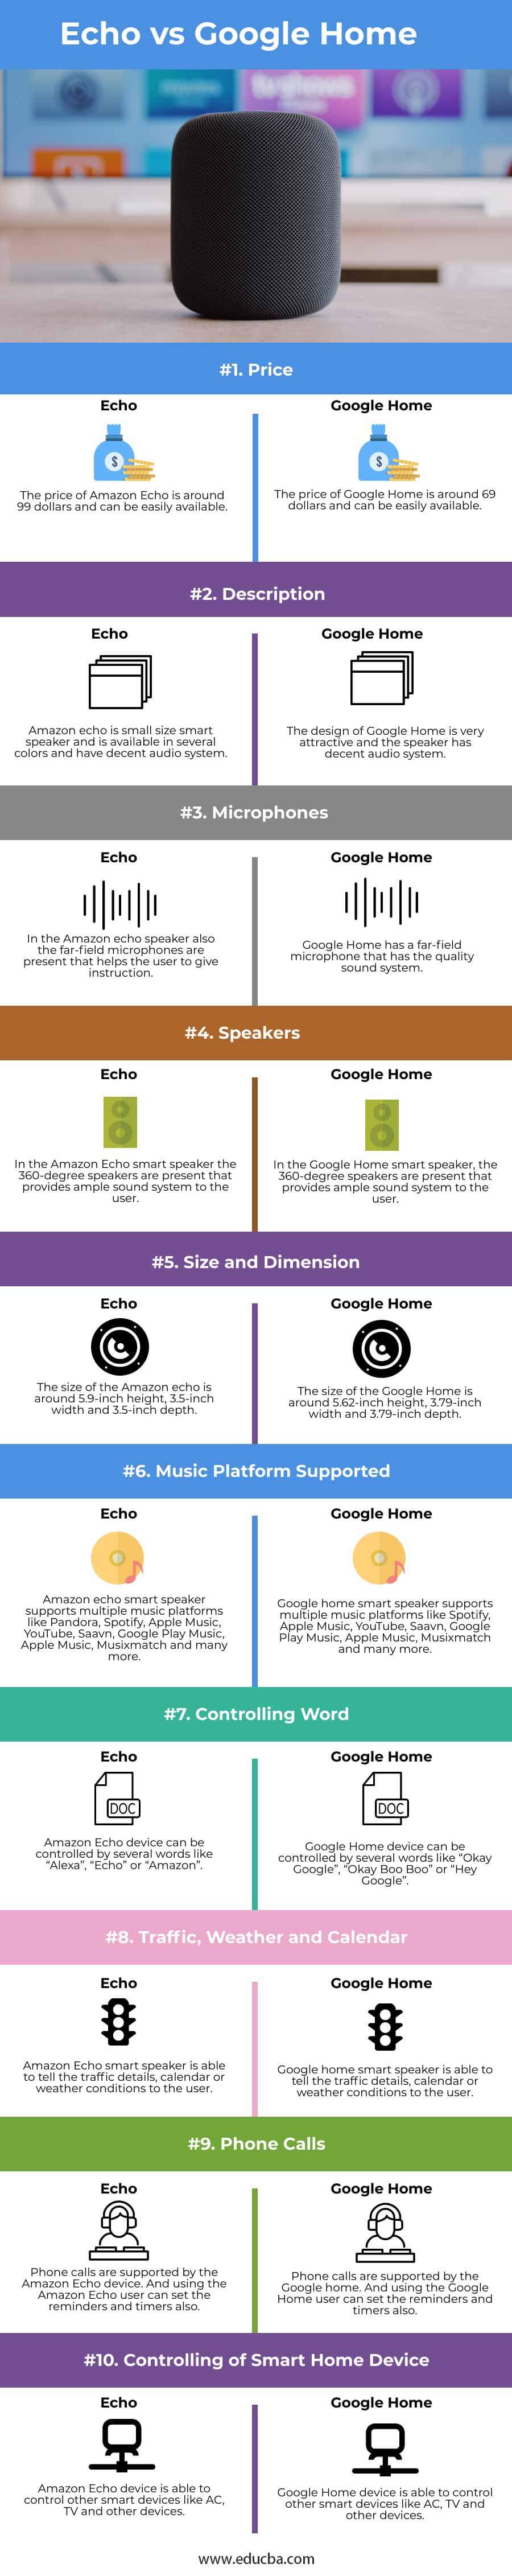 Echo-vs-Google-Home-info